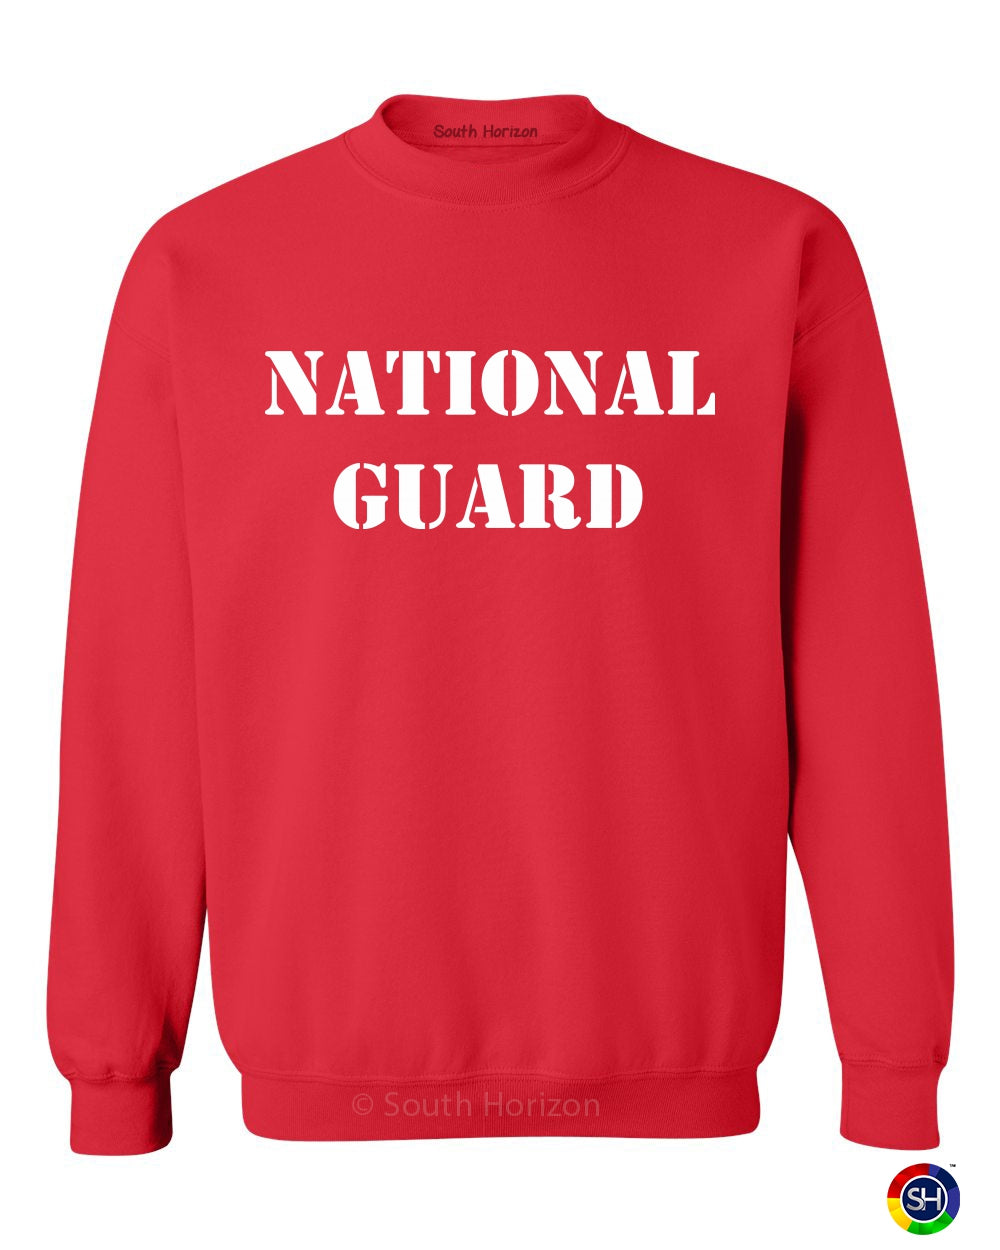 NATIONAL GUARD on SweatShirt (#347-11)